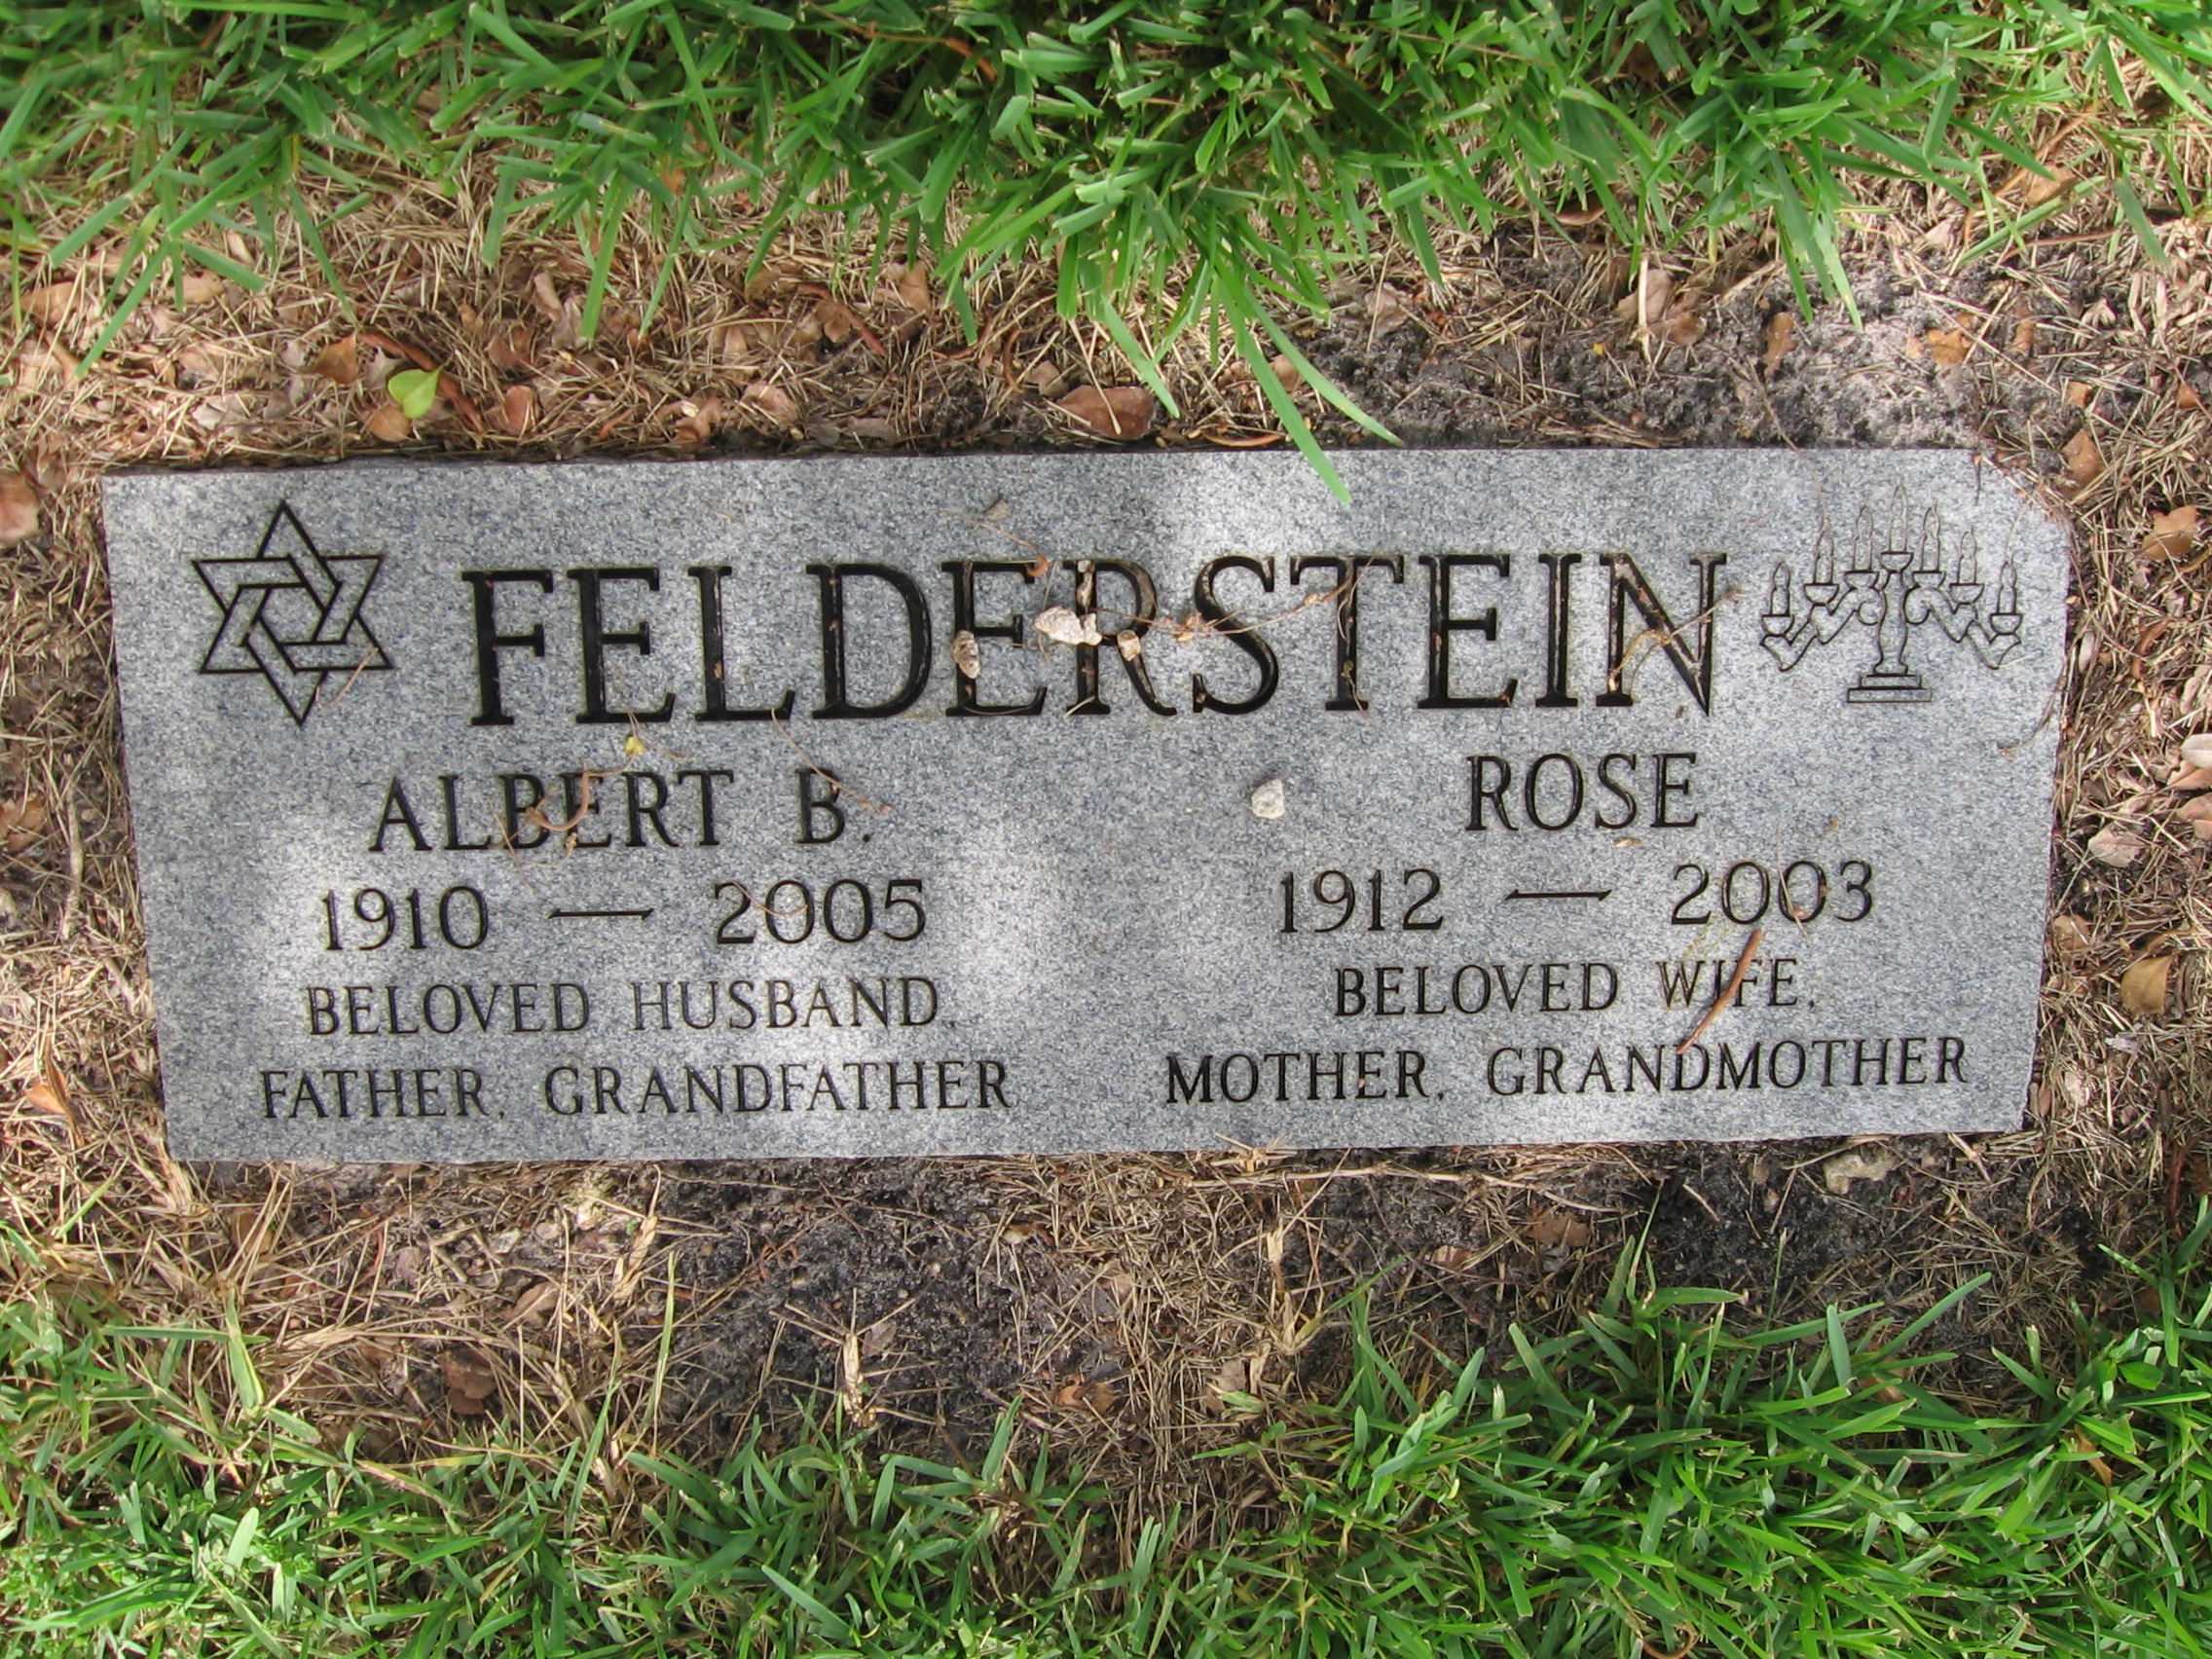 Albert Felderstein